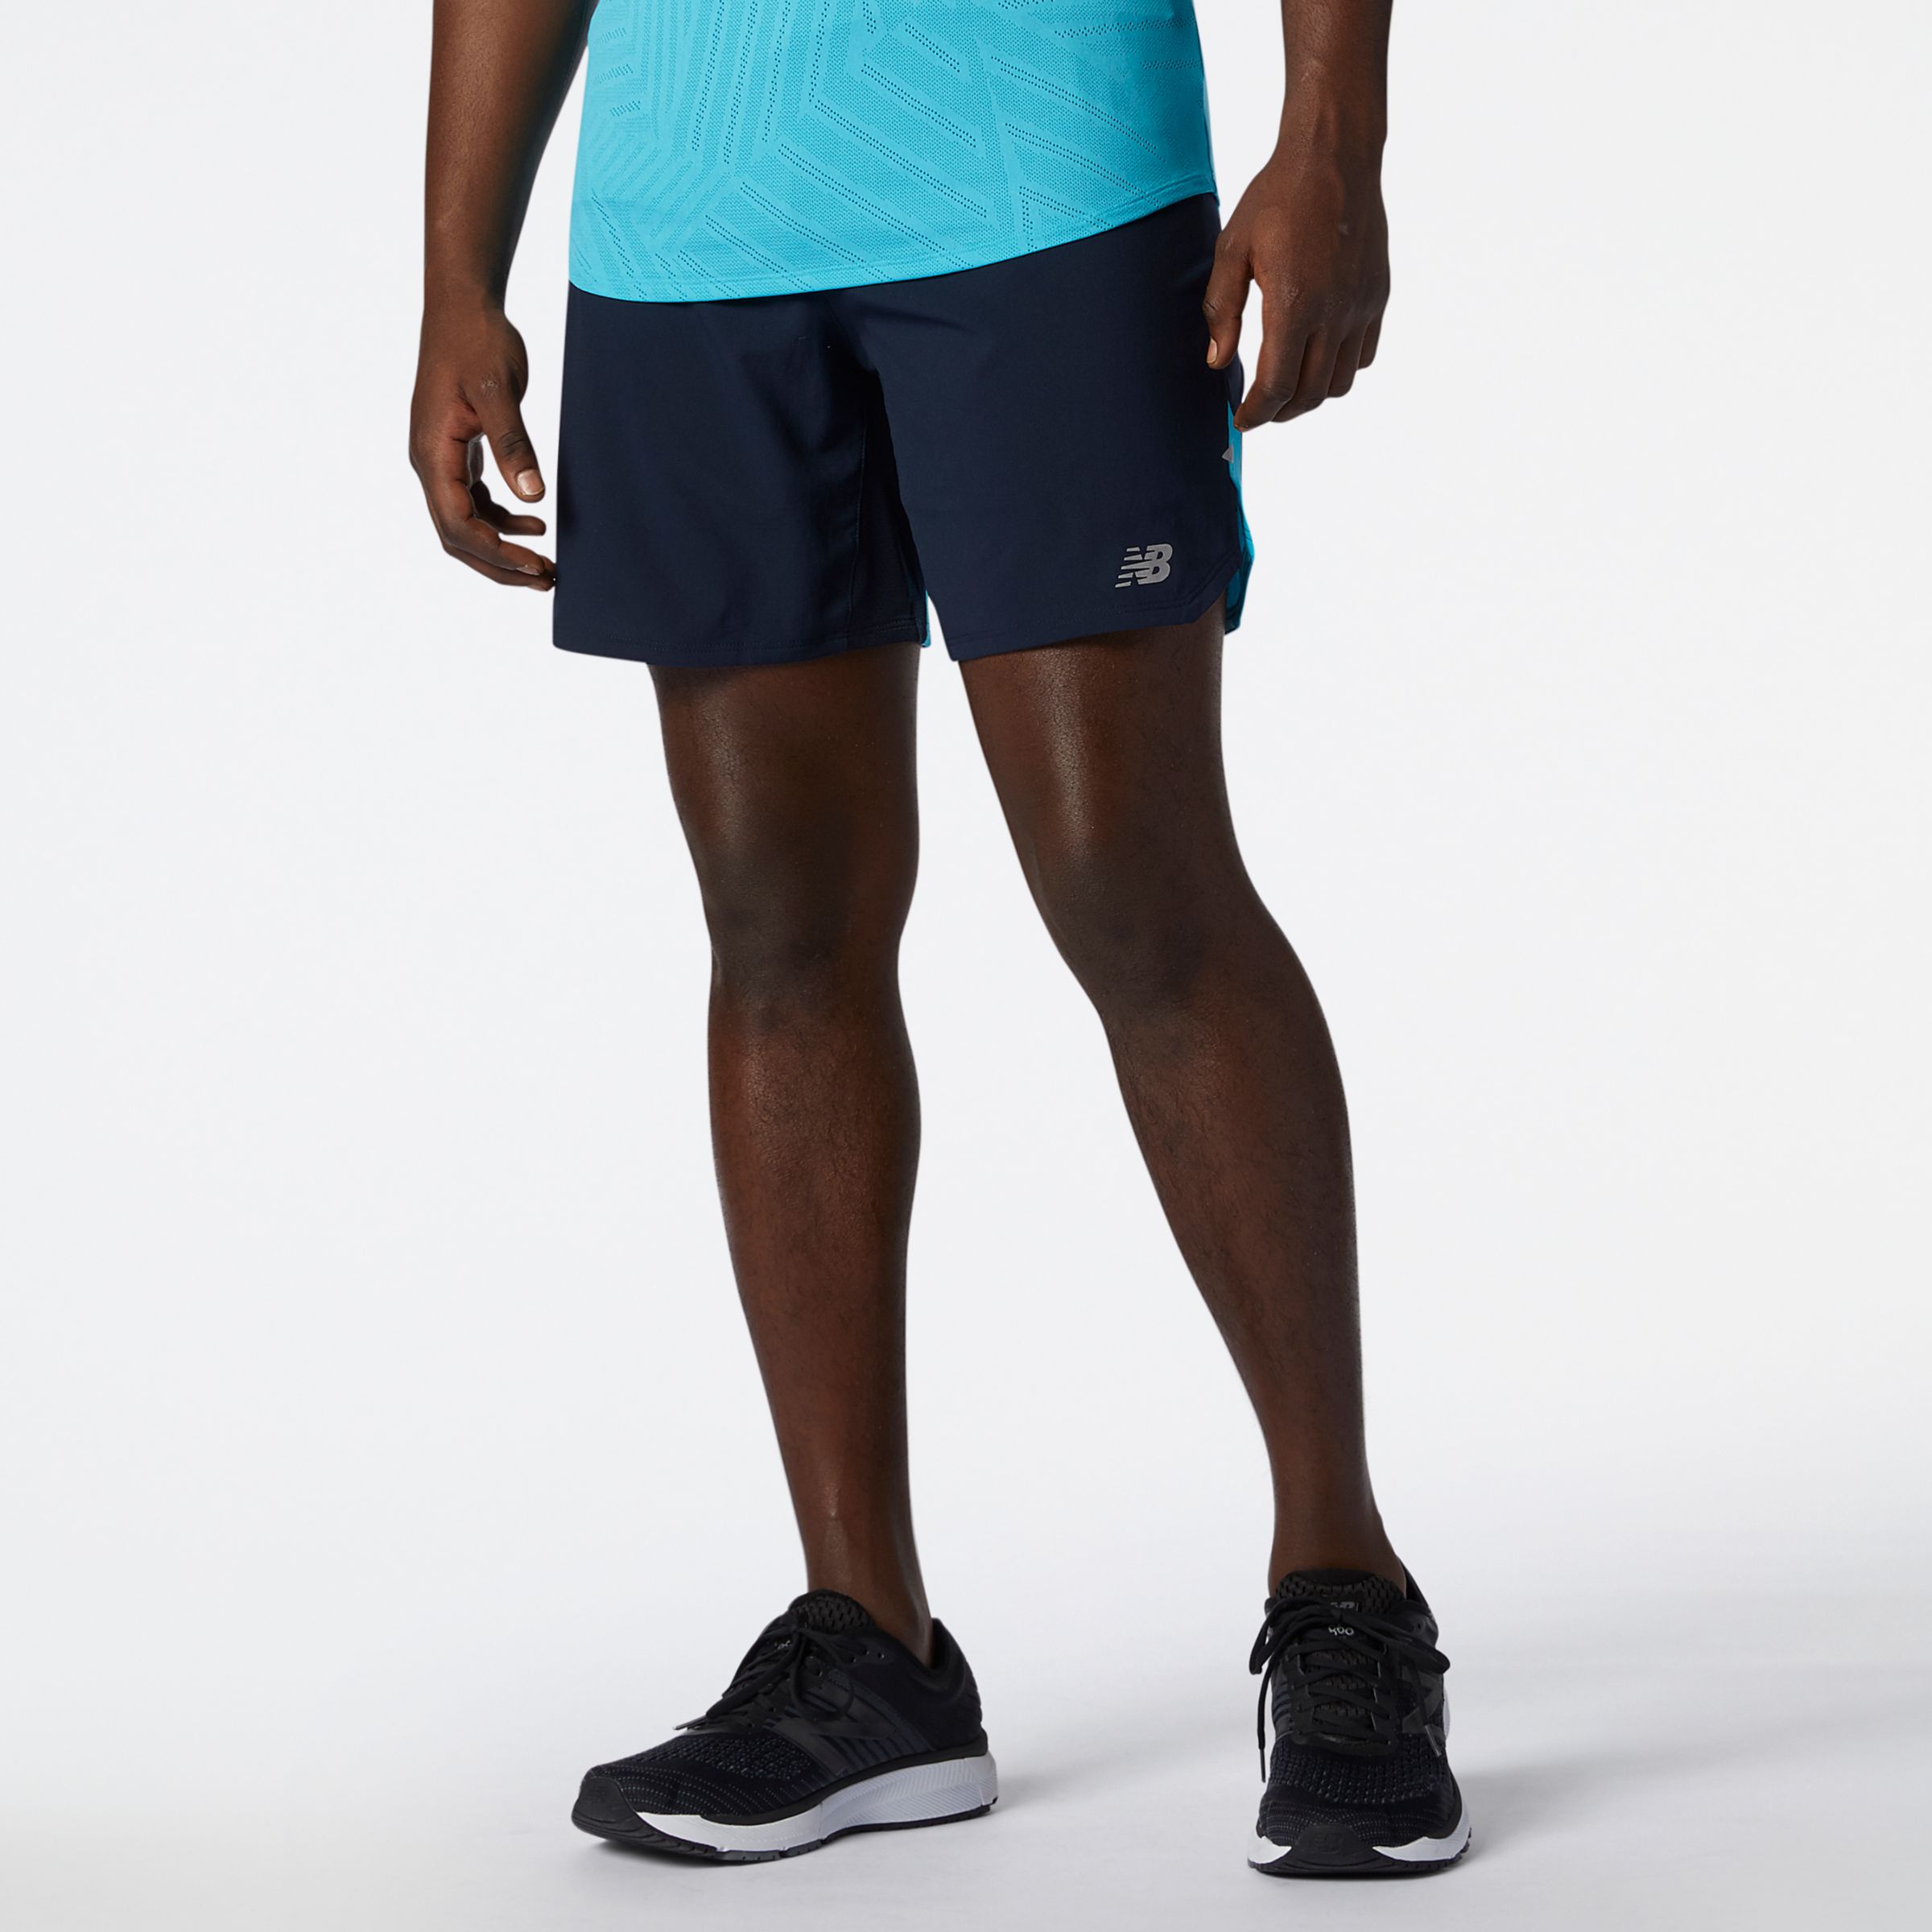 Athletic Shorts for Men - New Balance